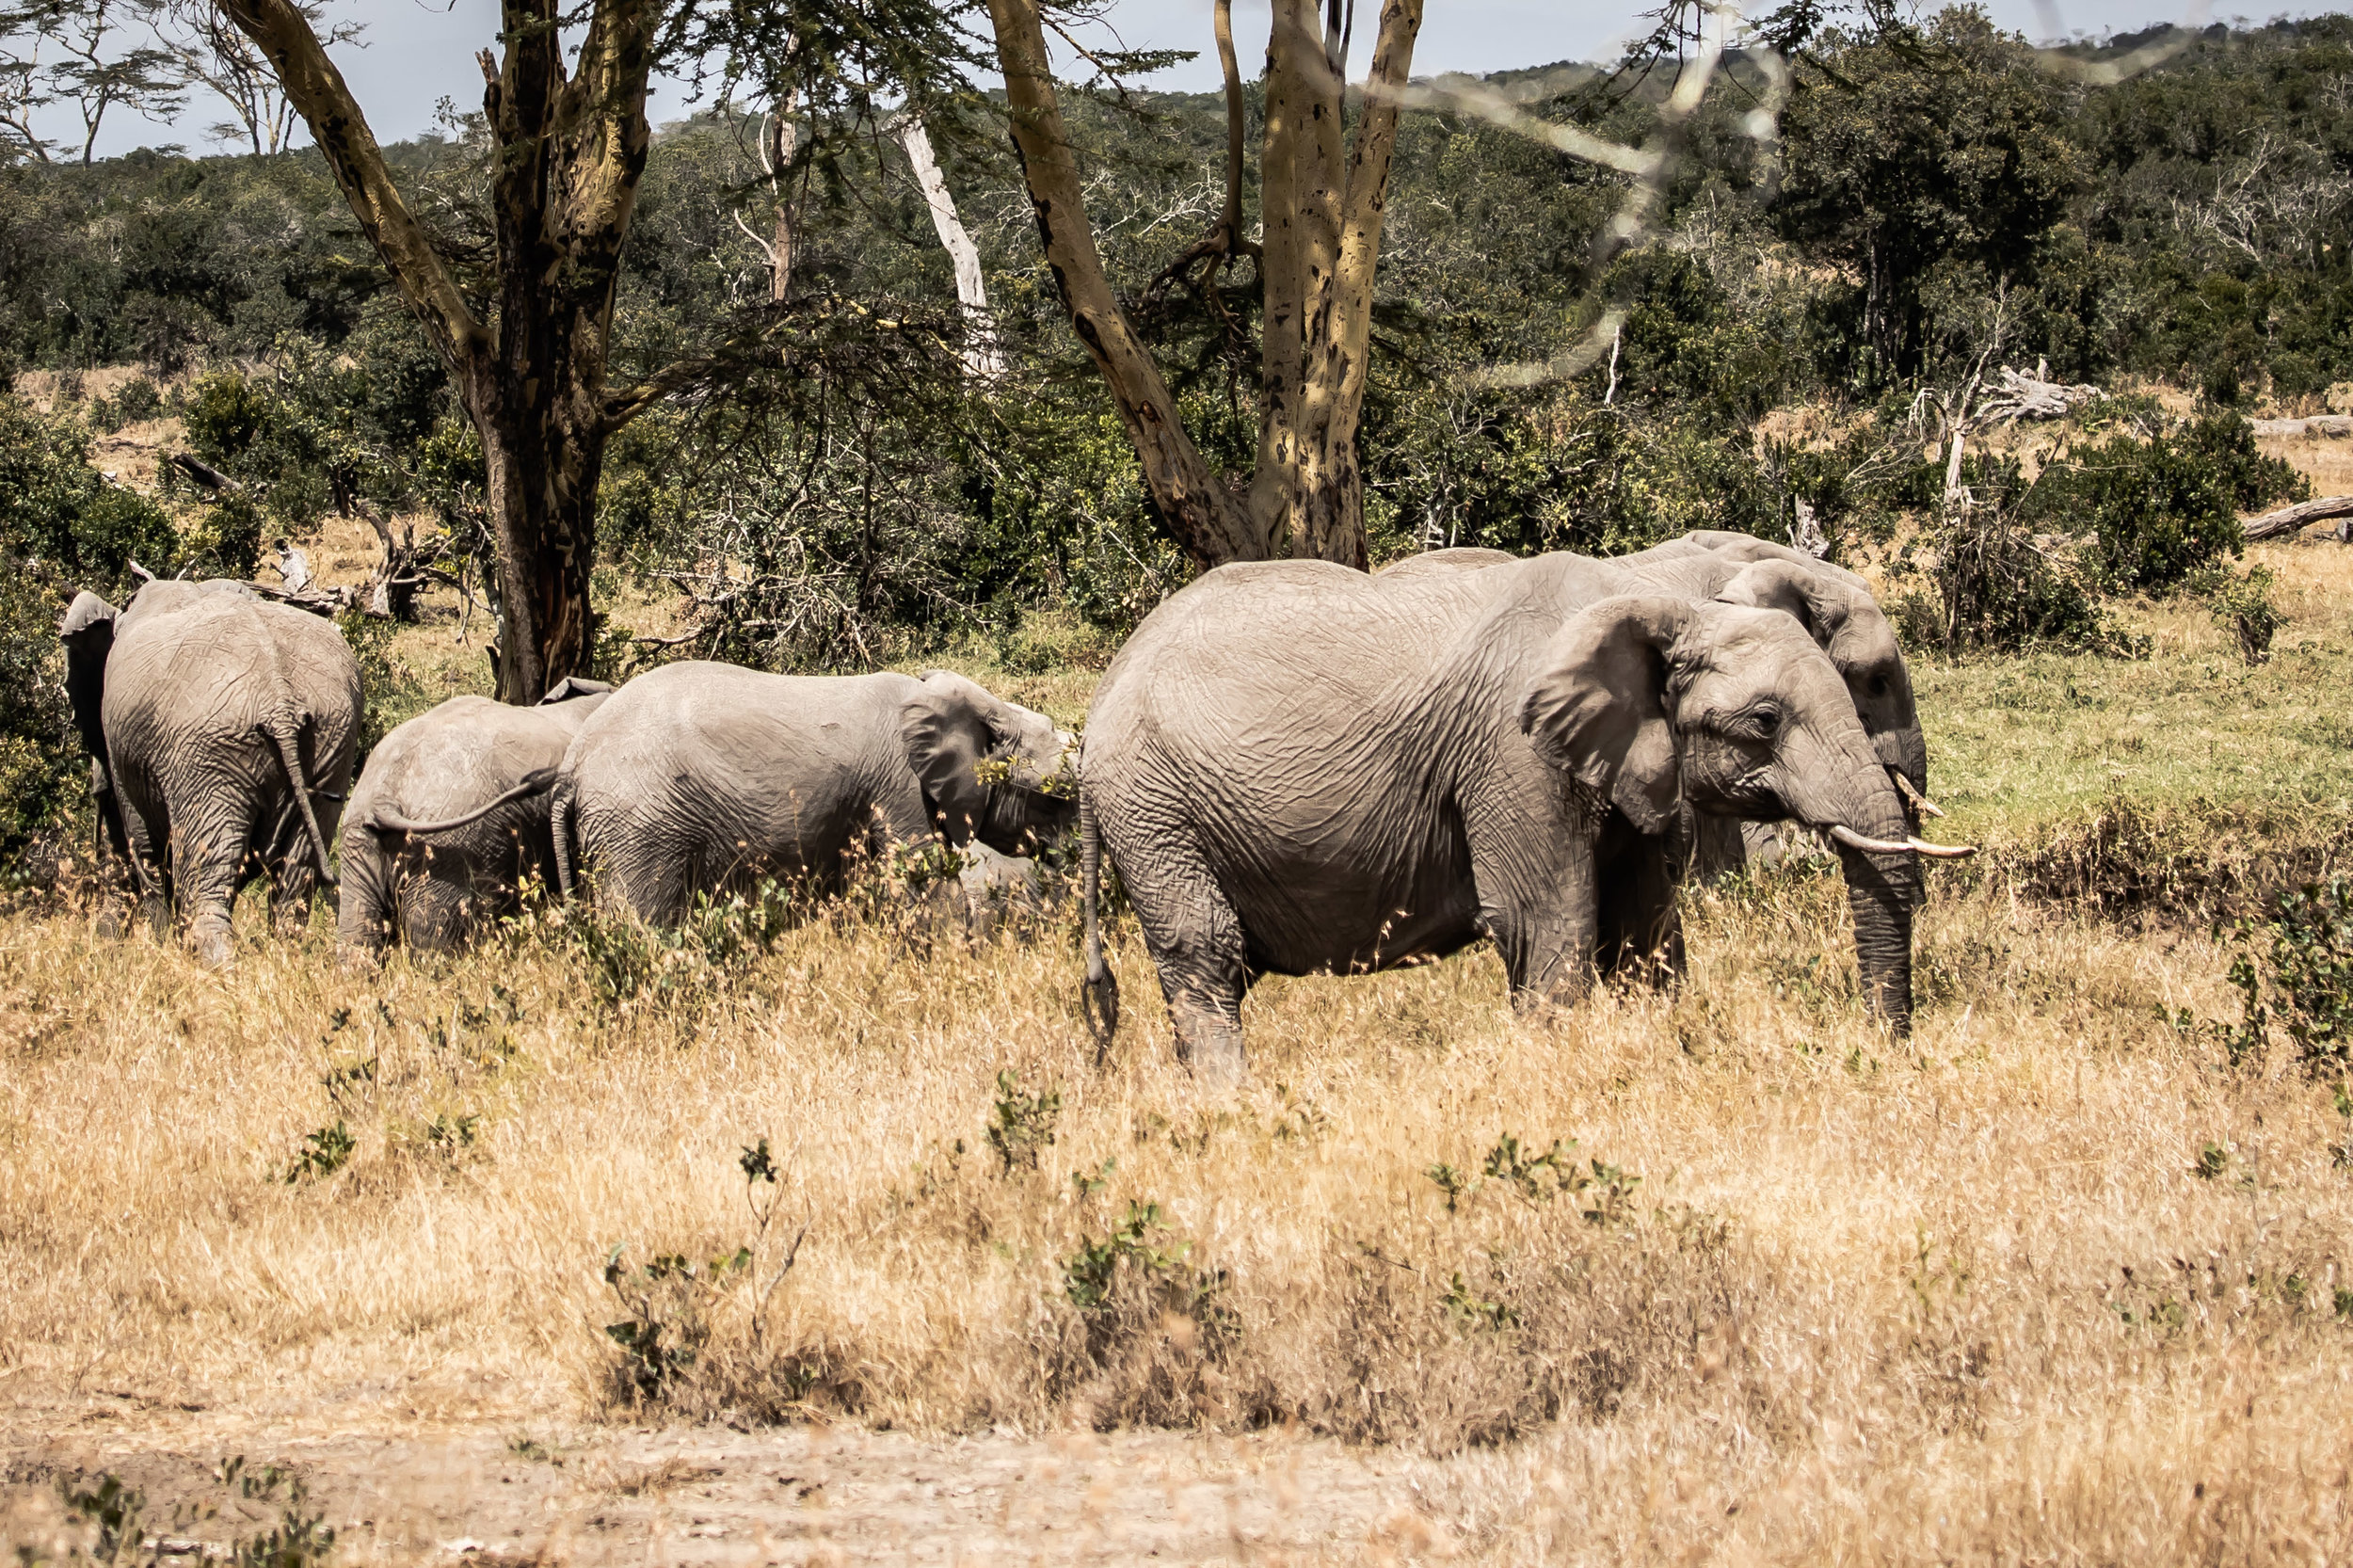 Elephants on the move, Ol Pejeta Reserve, Kenya